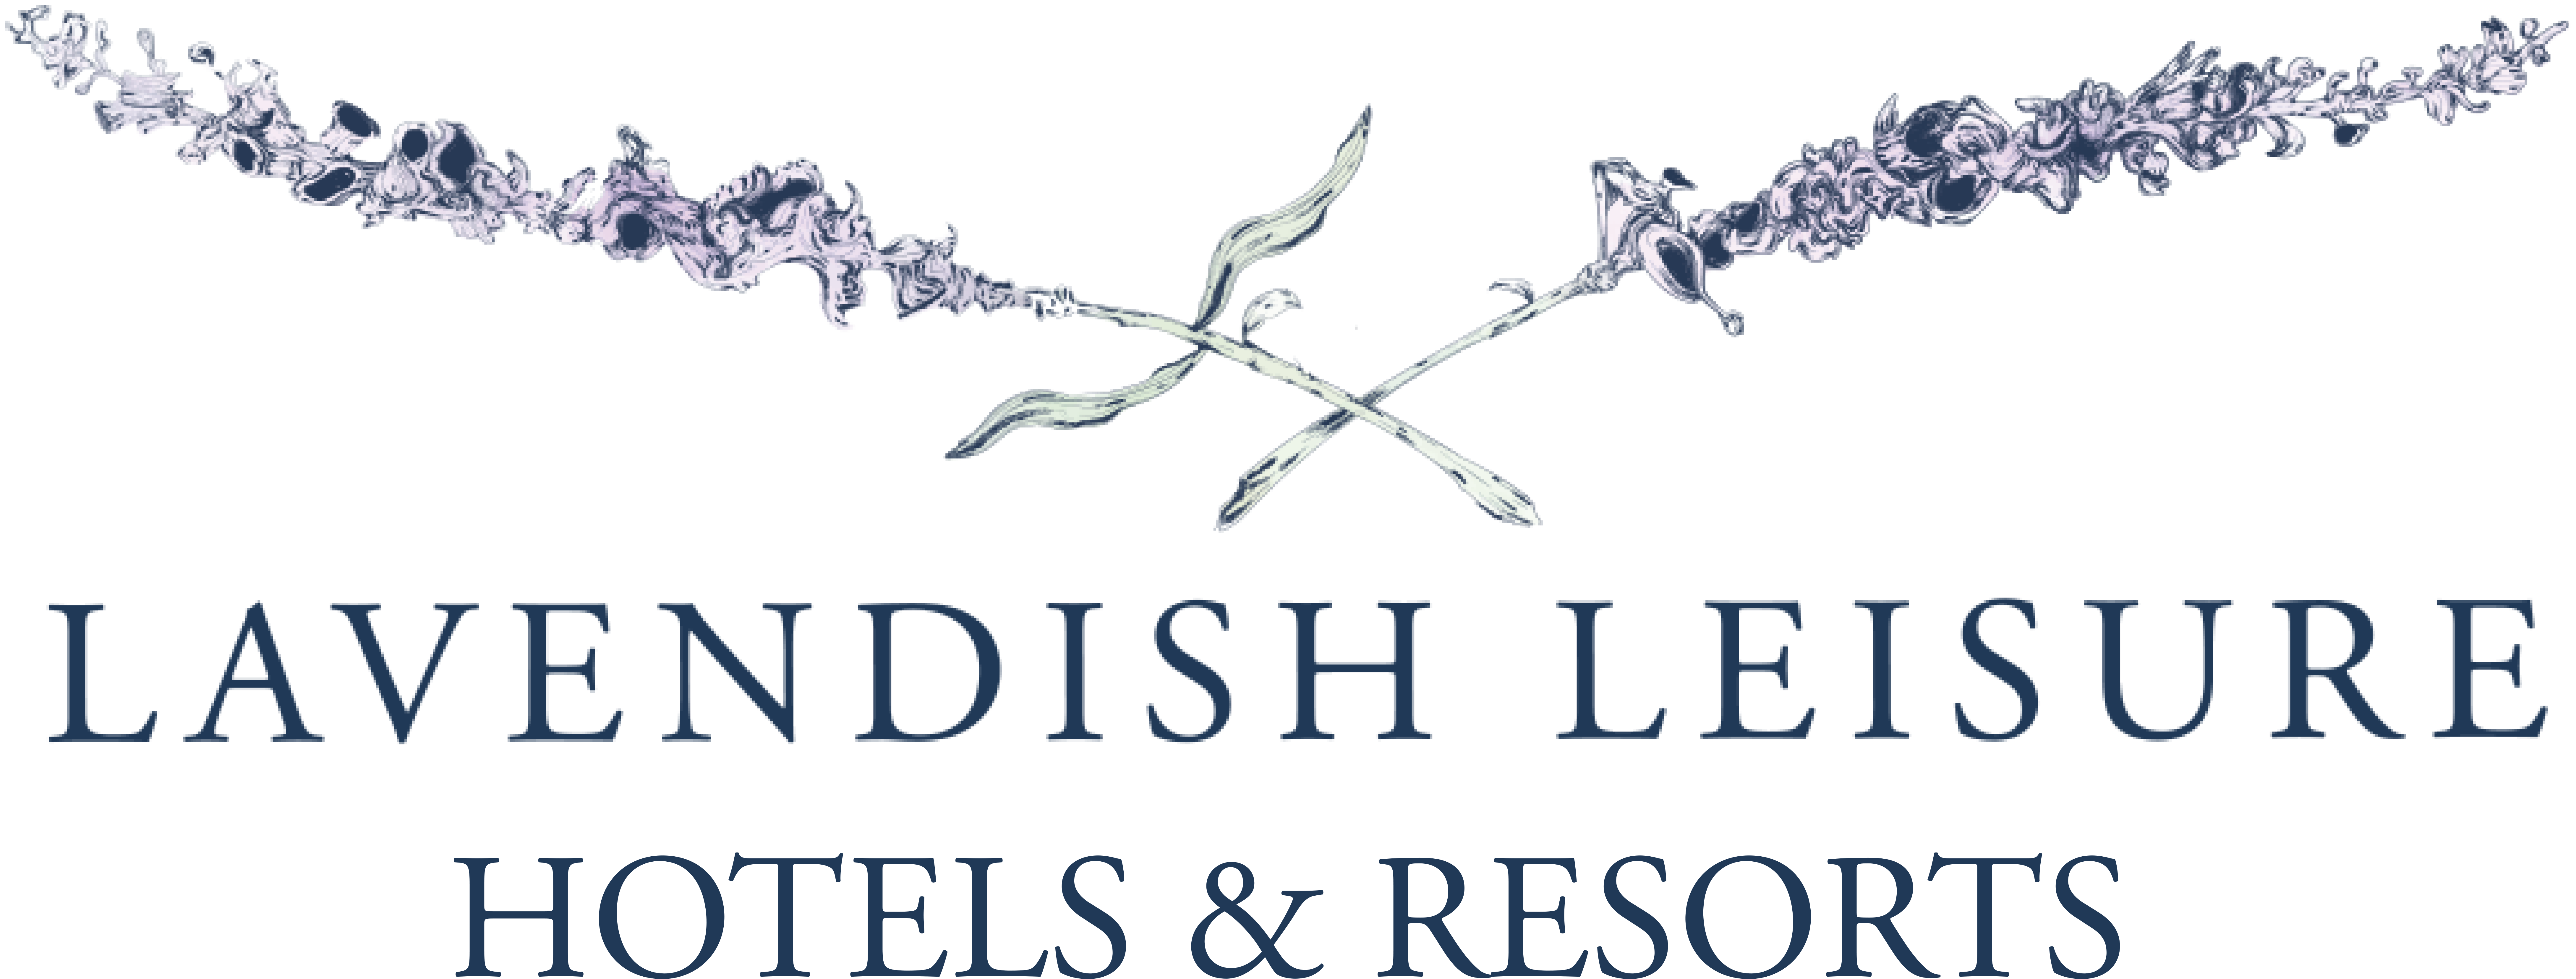 Lavendish Leisure Logo